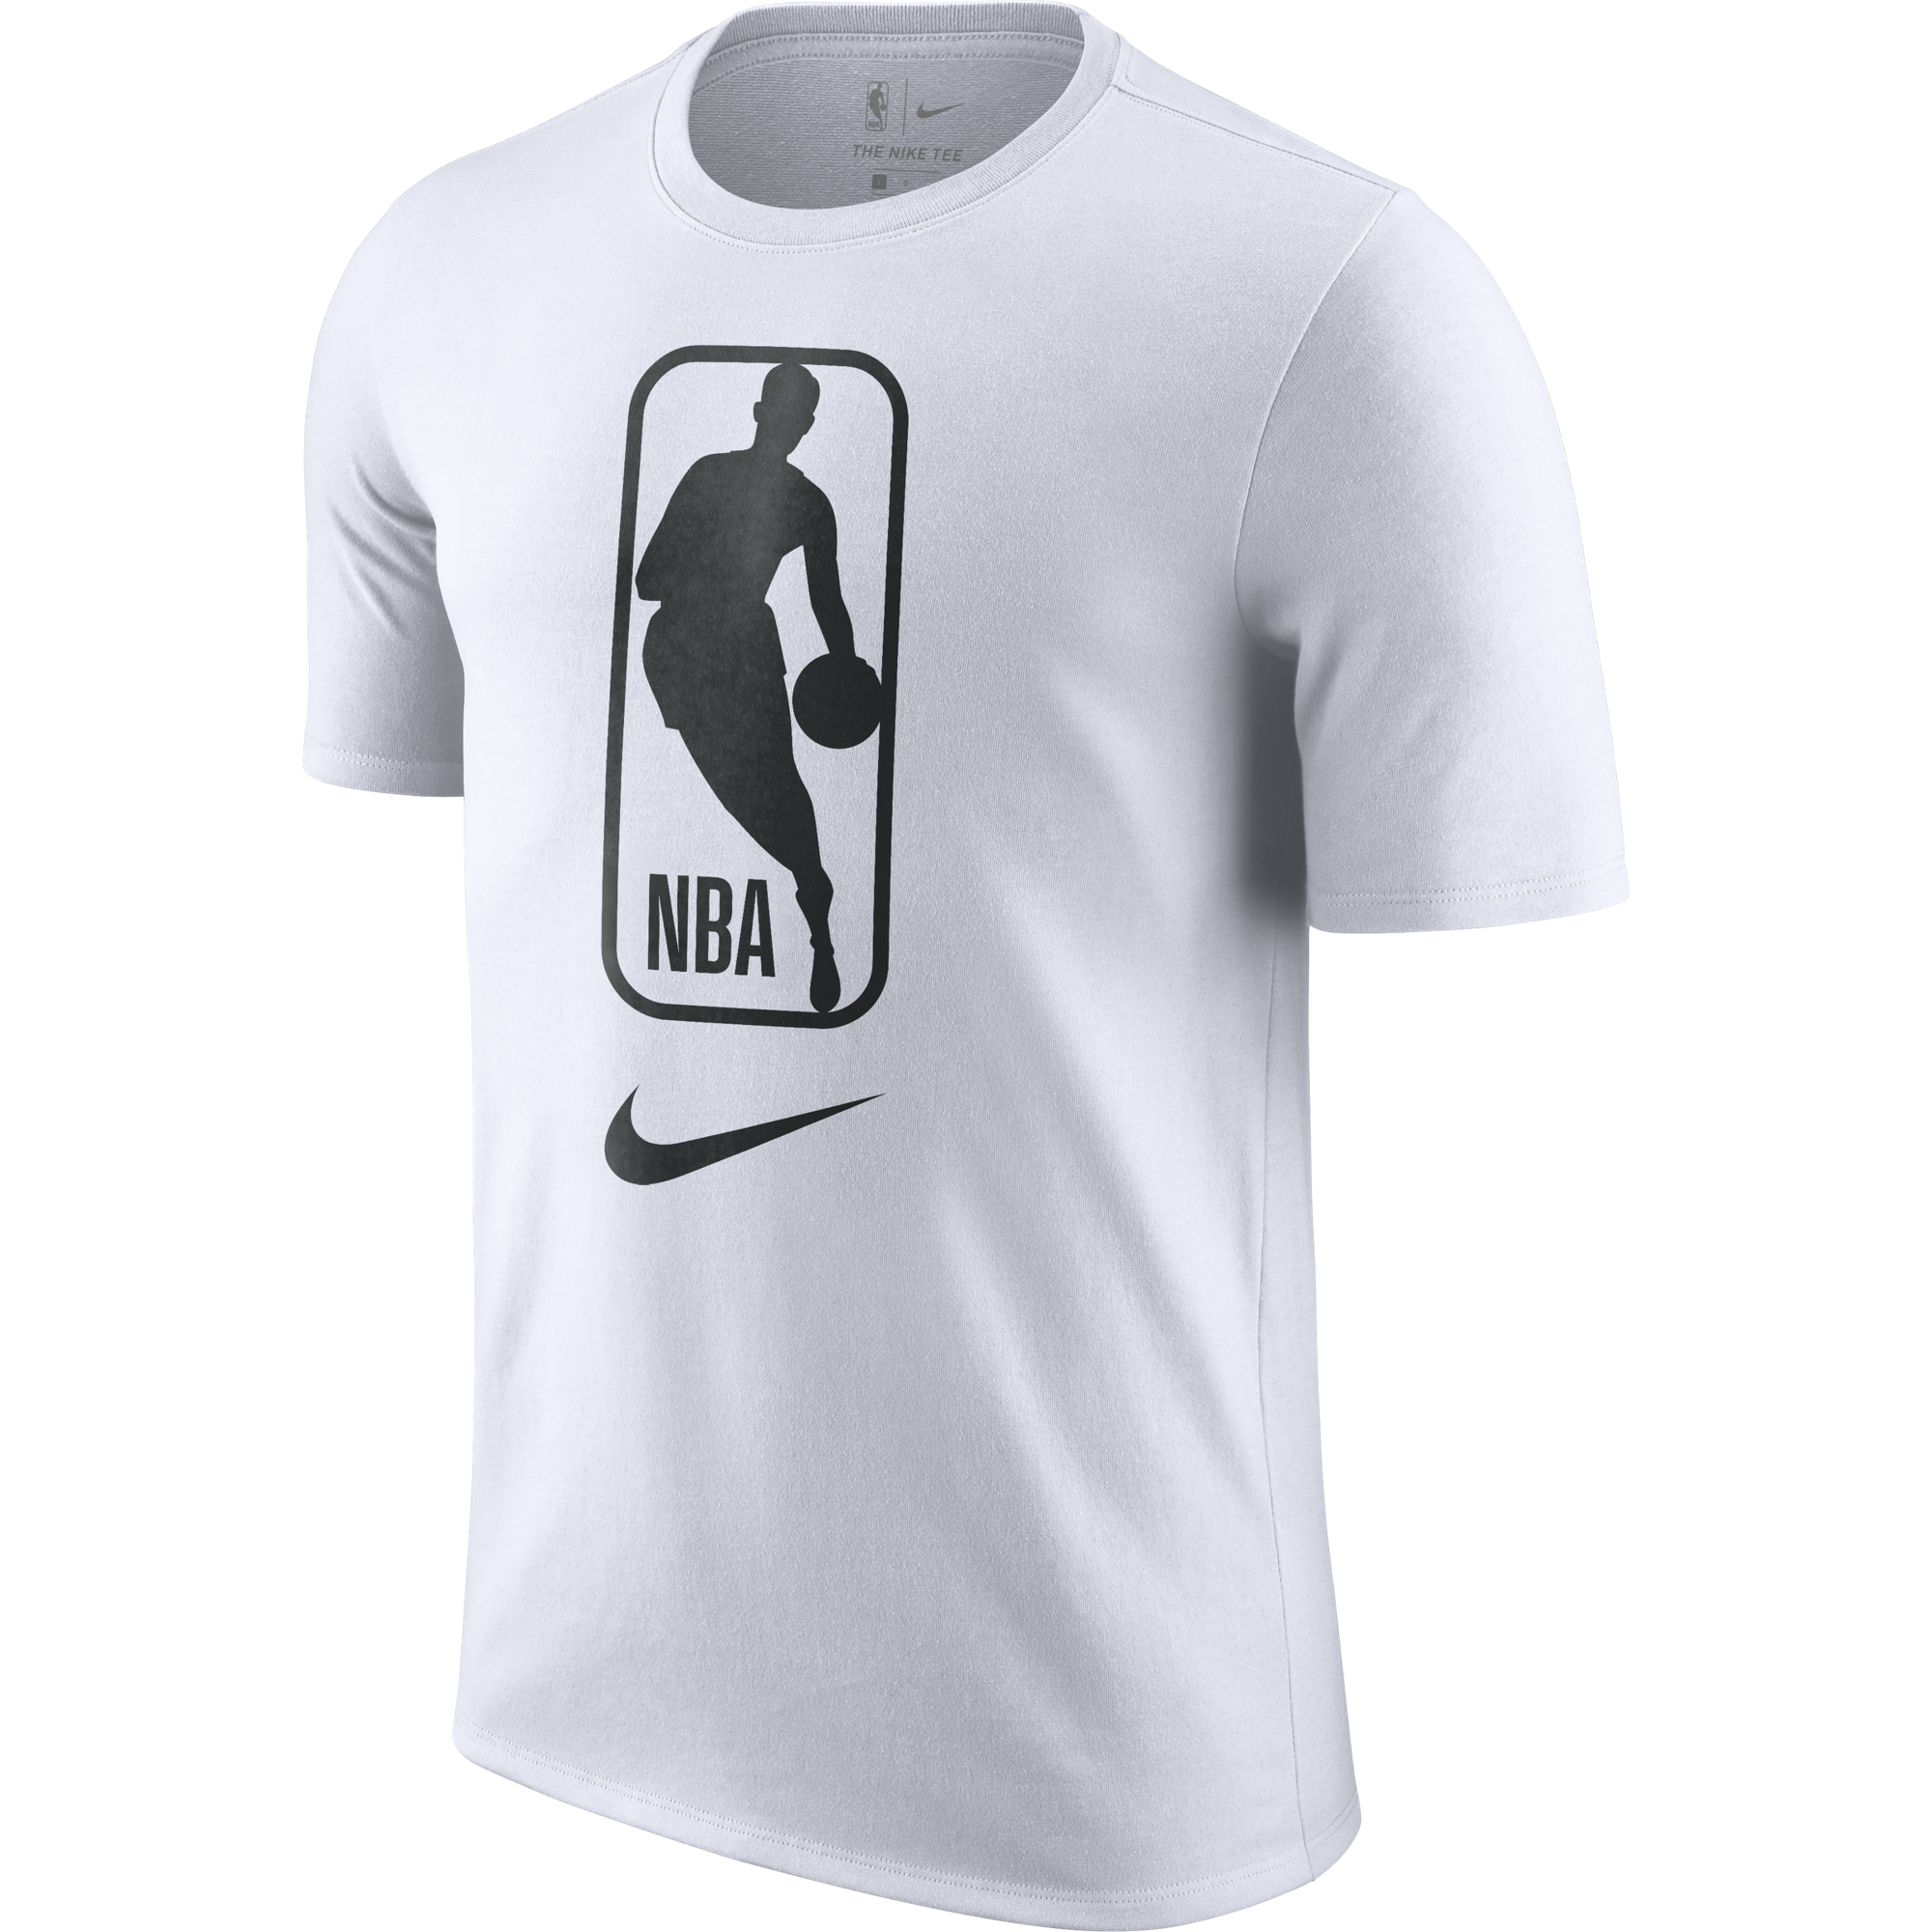 Футболки найк мужские купить. Nike NBA Dry Tee Team 31 Sleeve. Футболка Nike Air Dri Fit. Мужская футболка Nike НБА Dri-Fit. Футболка найк белая Dry Fit.